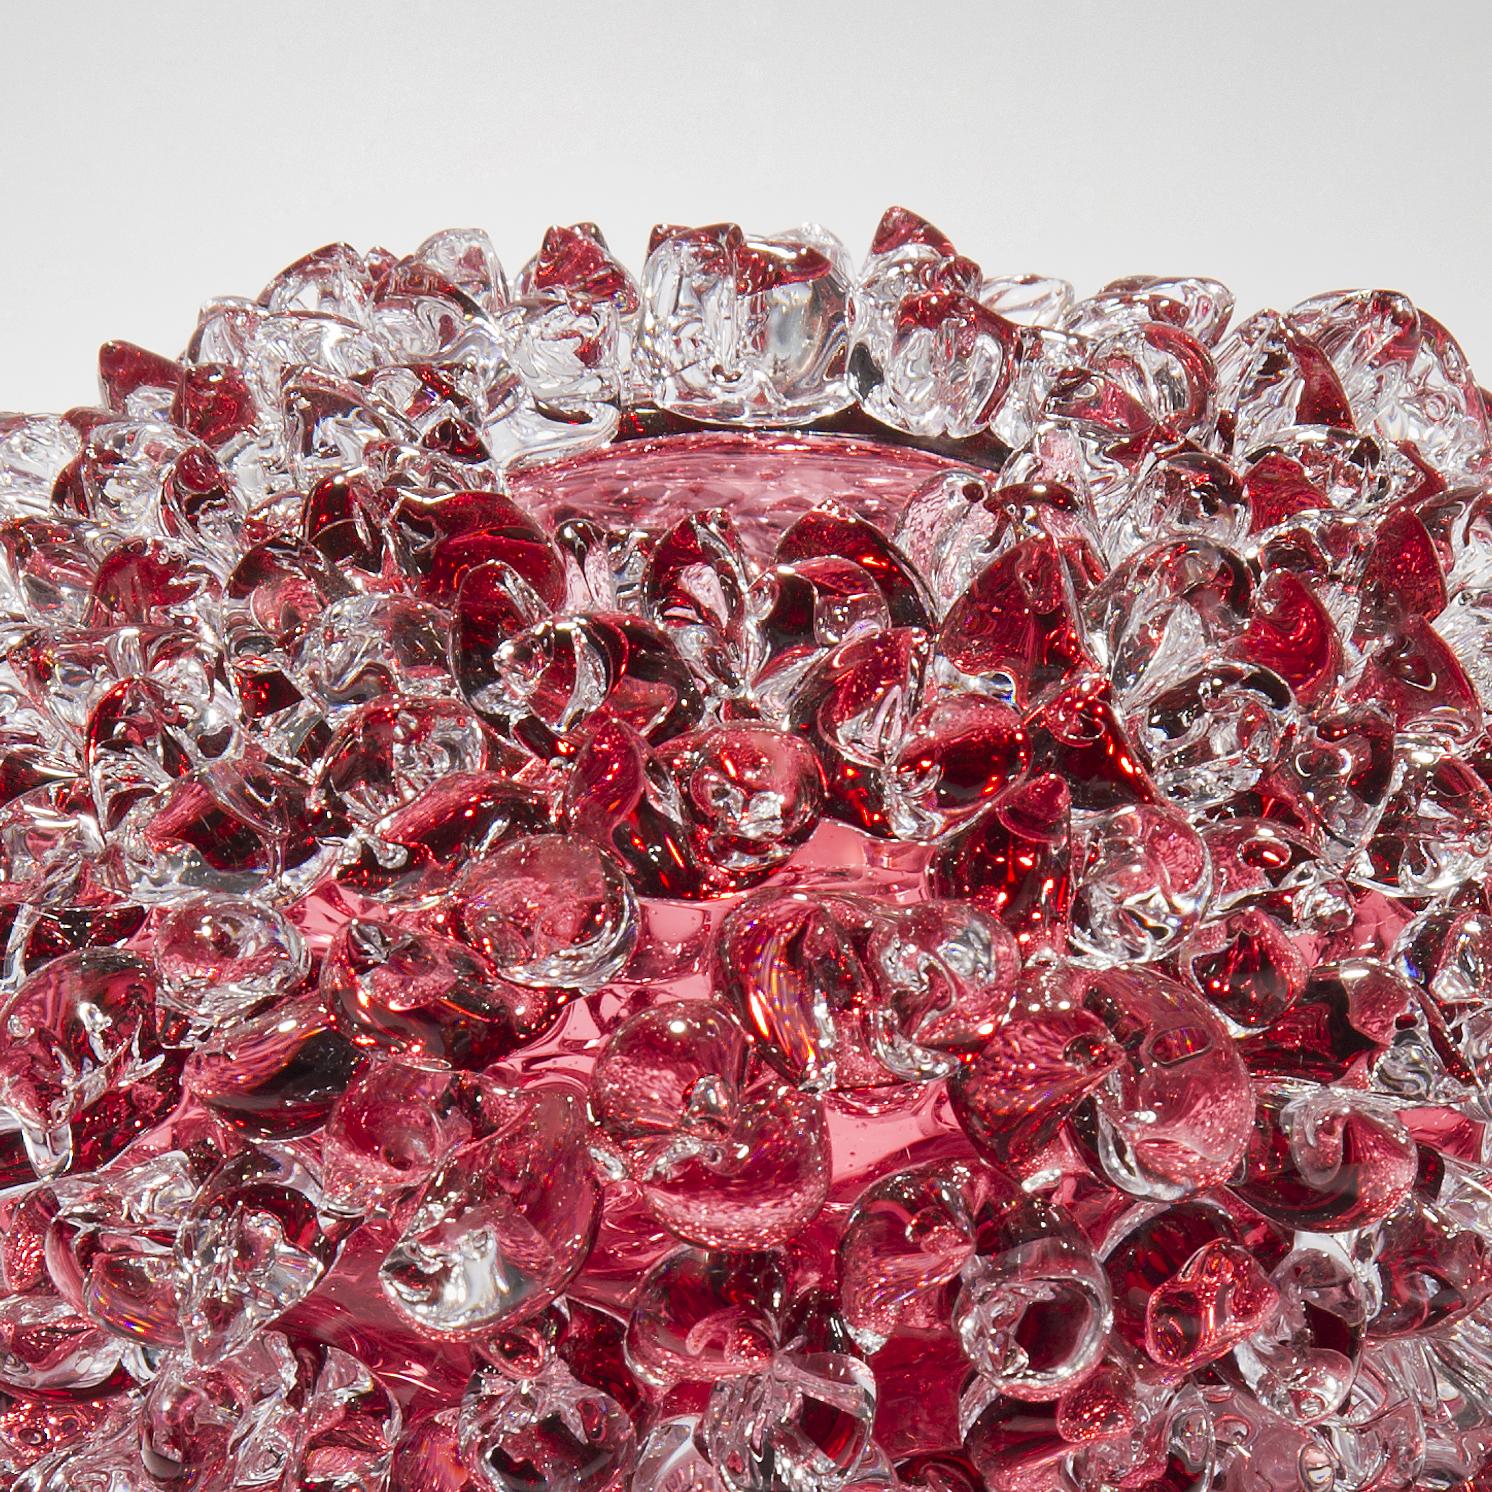 Organic Modern Ostreum in Heliotrope, a Unique Pink Glass Centerpiece by Katherine Huskie